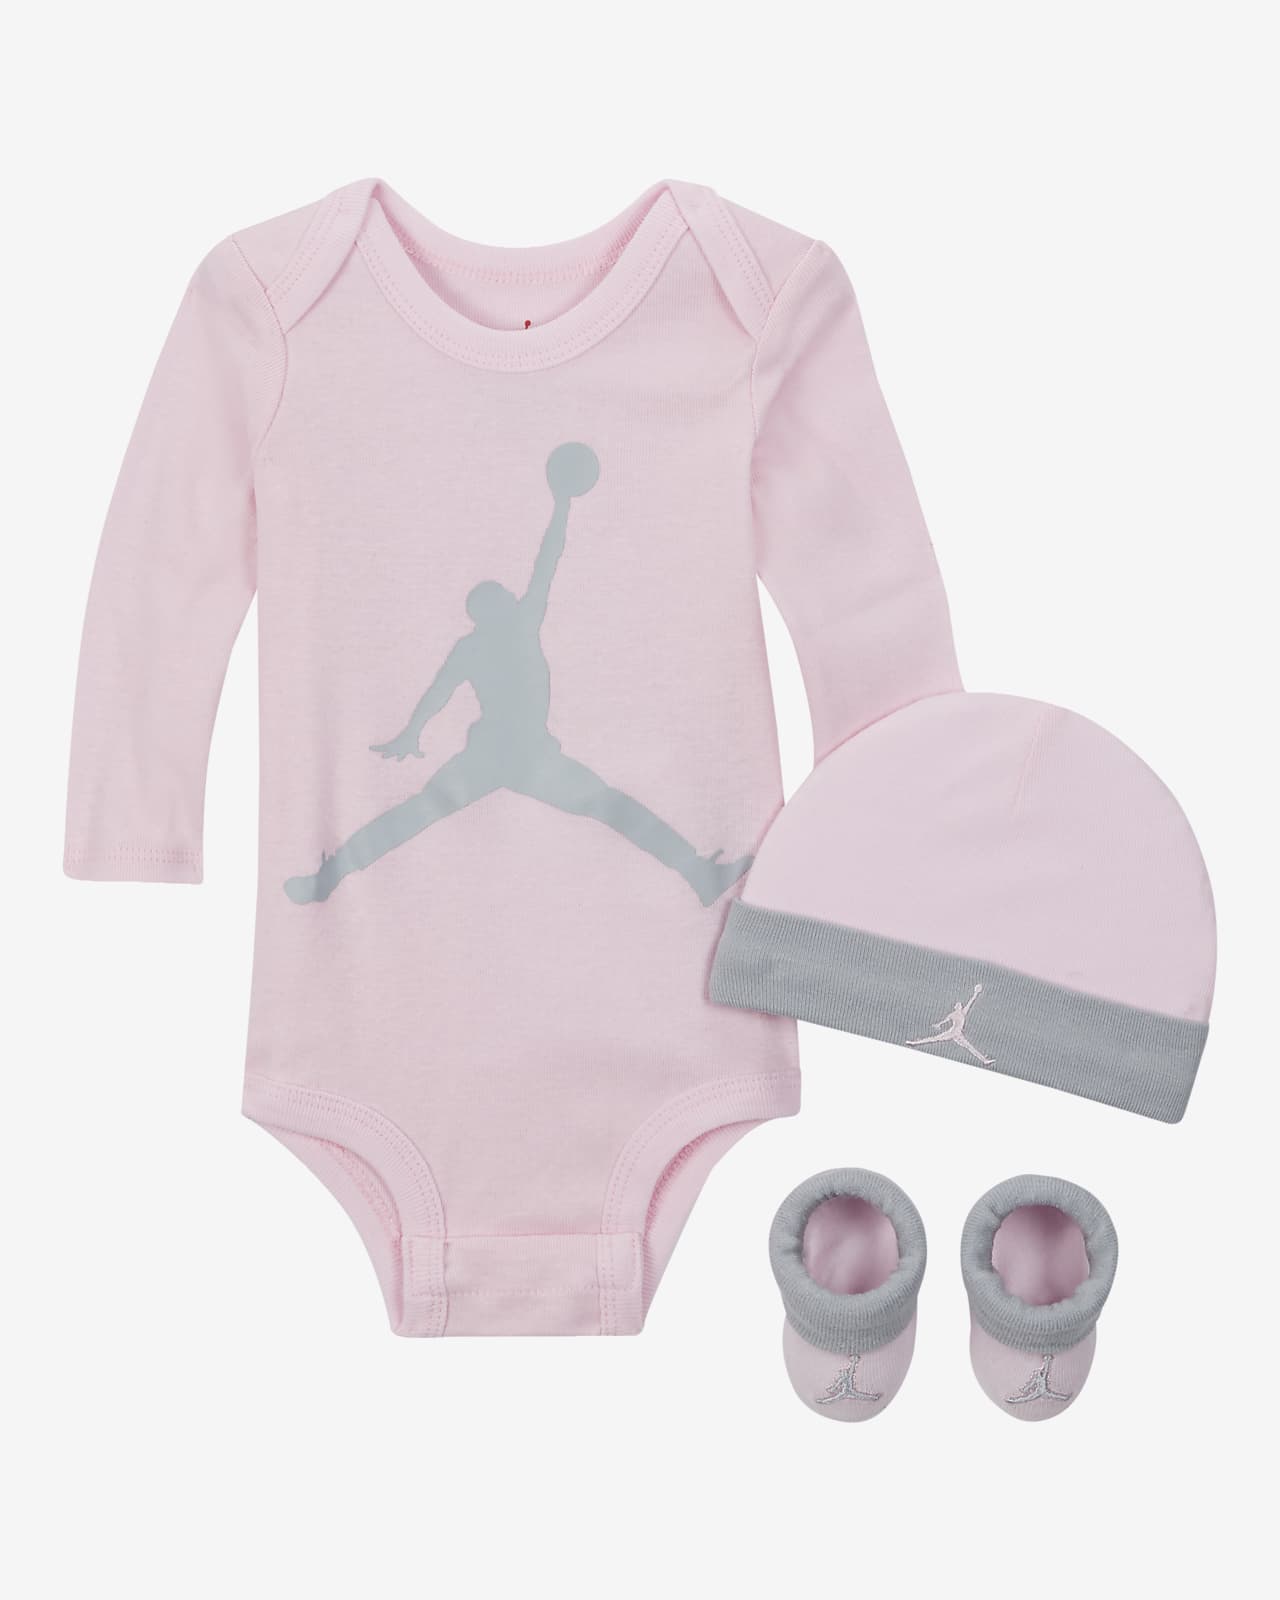 Jordan Baby Bodysuit, Beanie and Booties Set. Nike.com